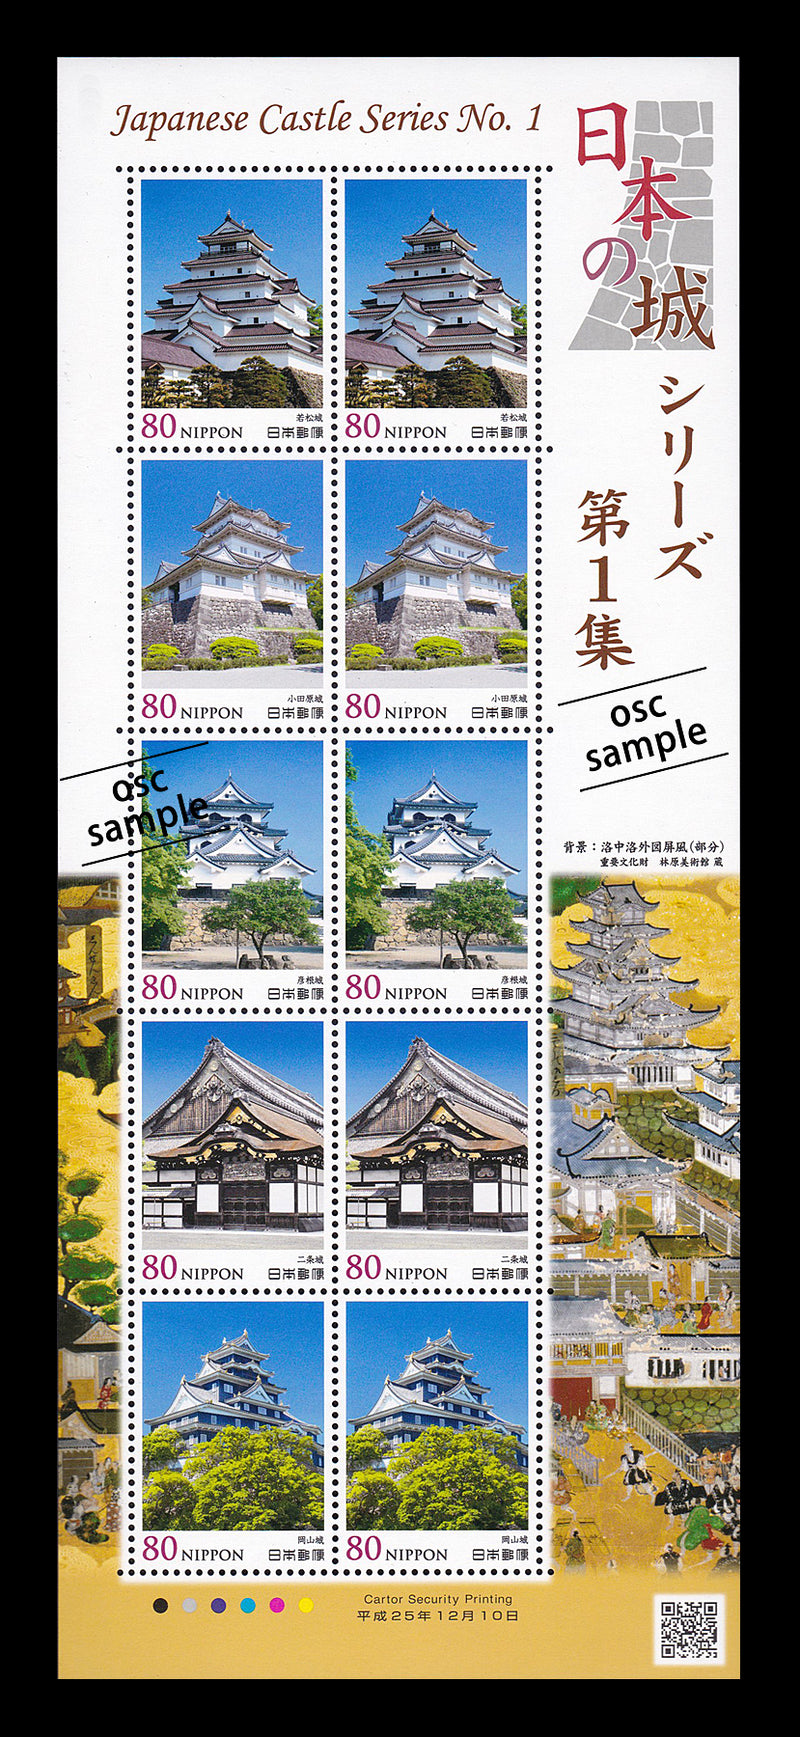 Japanese Castle Series No.1